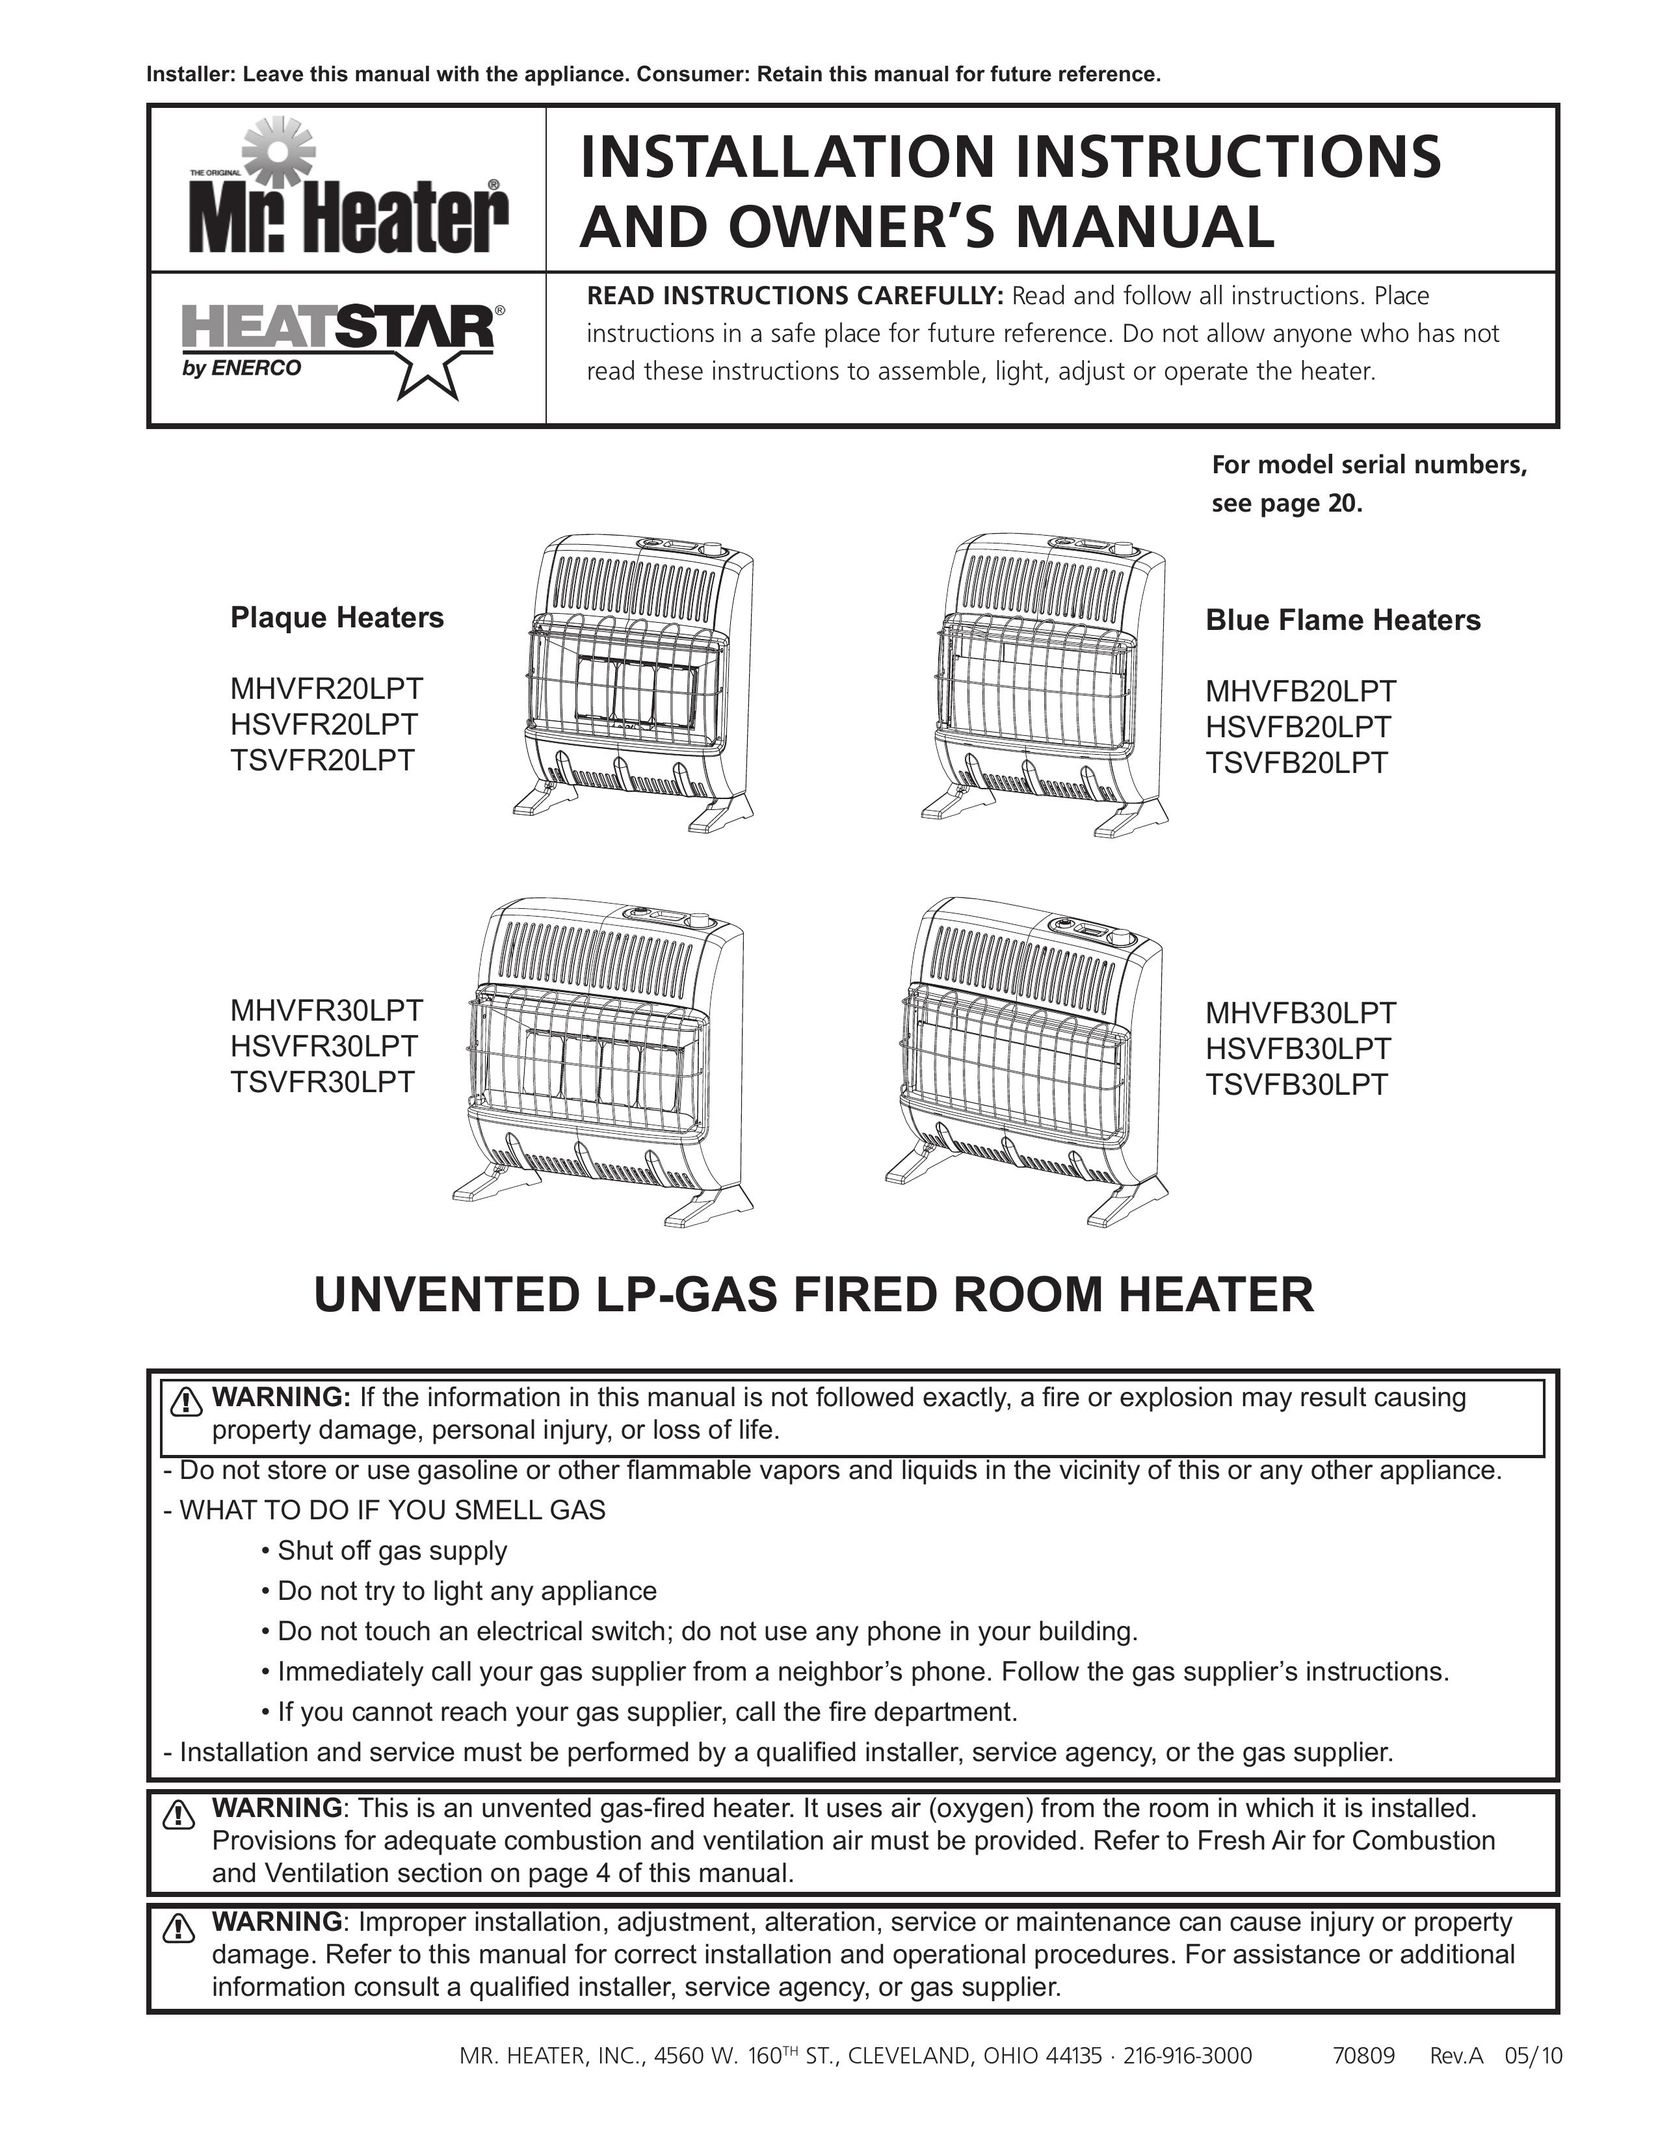 Enerco MHVFR20LPT Gas Heater User Manual